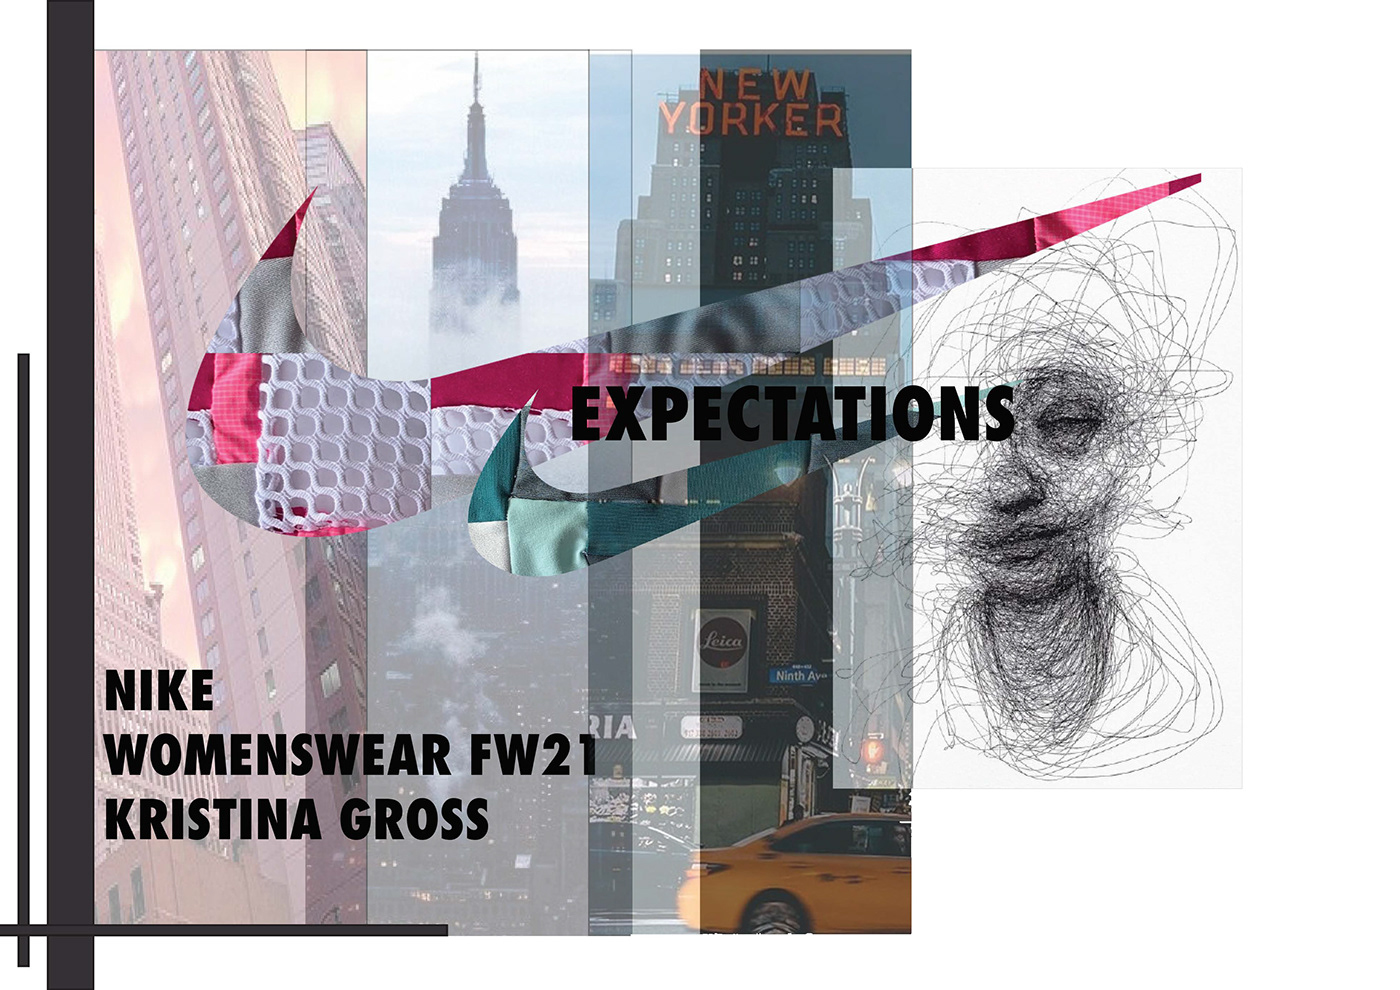 3DSamples AcademyofArtUniversity draping fashion design fashiondesignportfolio illustrations Nike Sportswear technicaldrawings